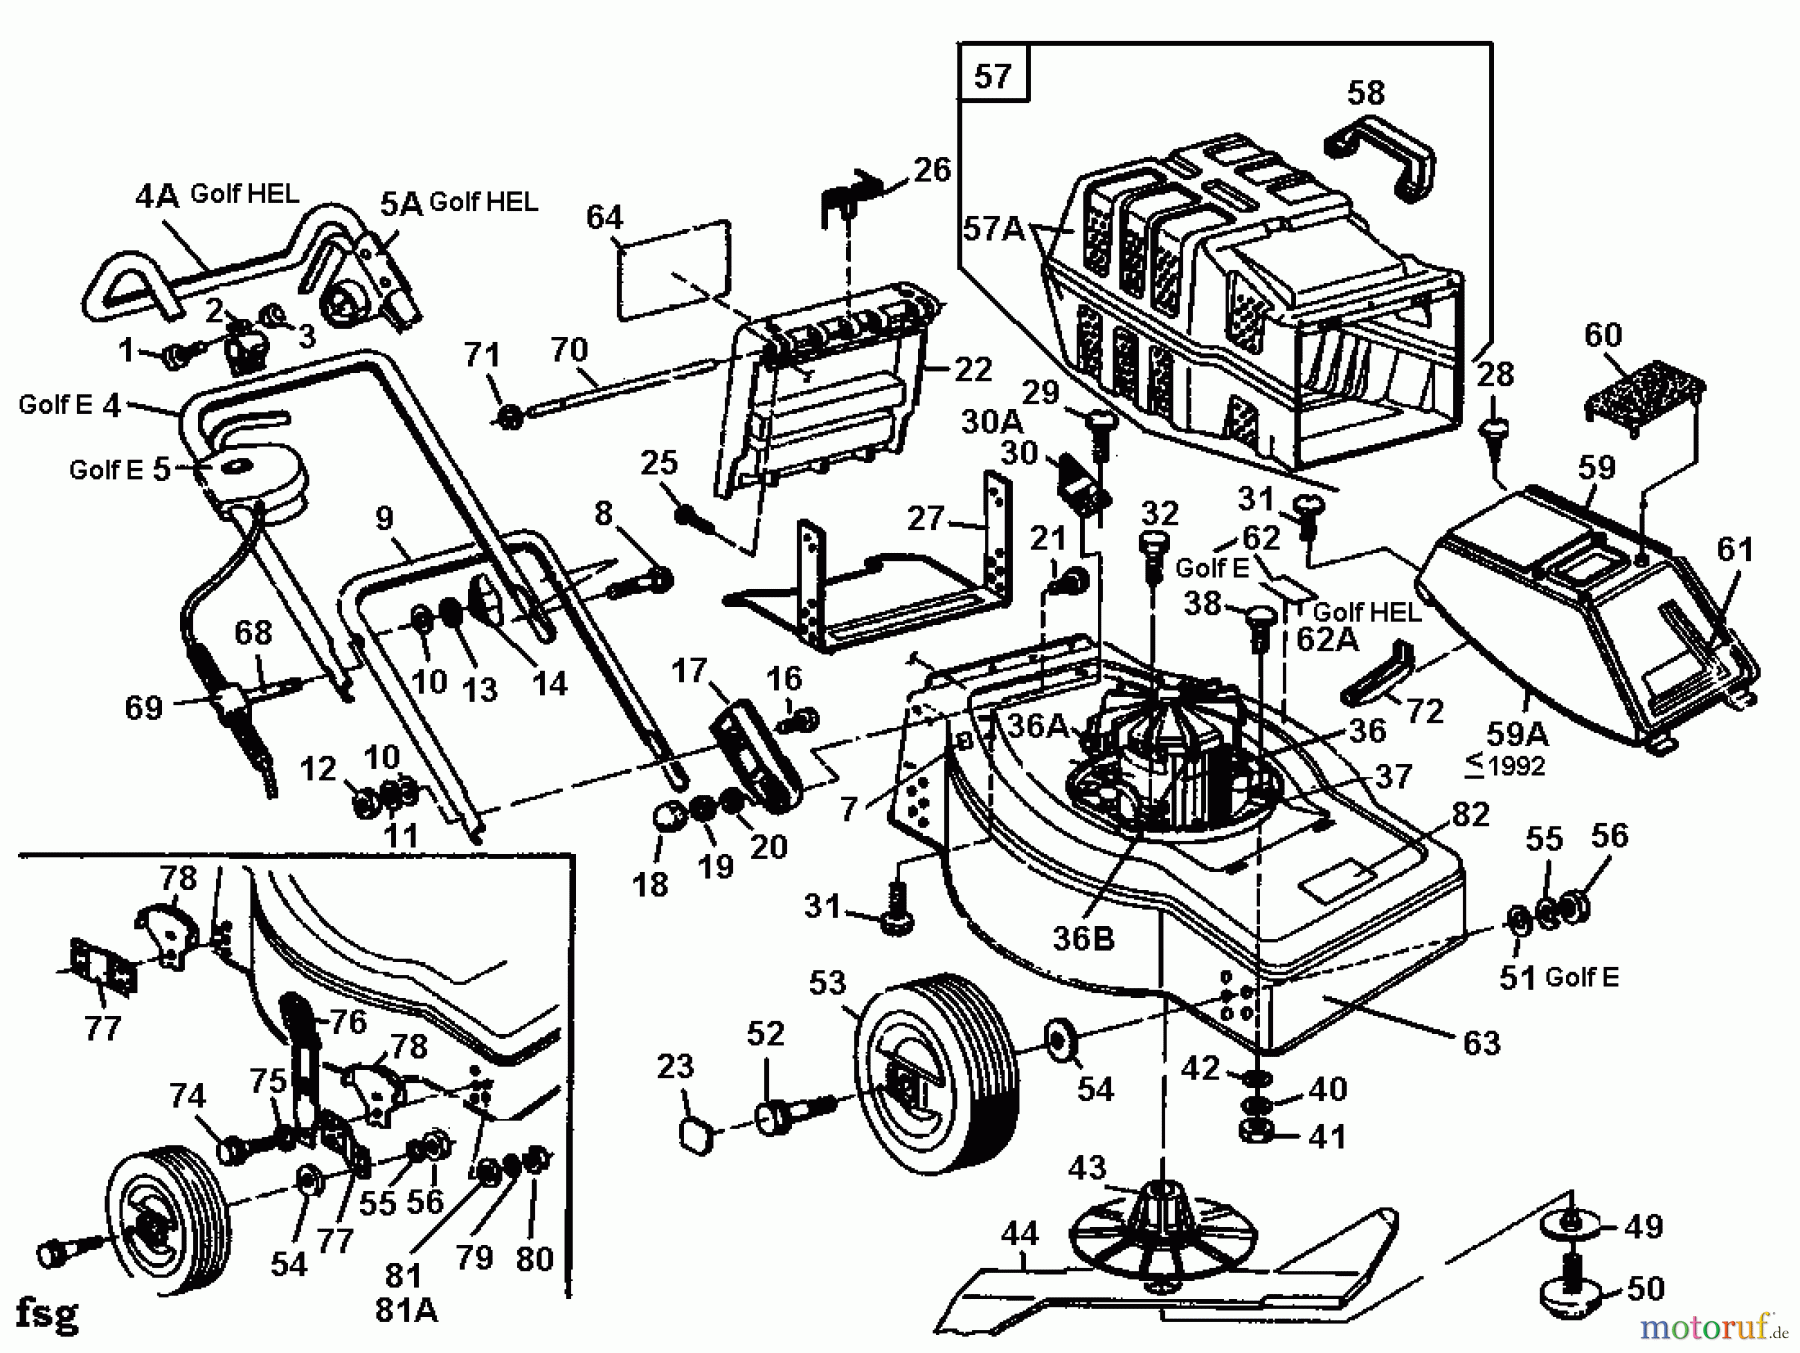  Golf Electric mower E 02881.06  (1992) Basic machine